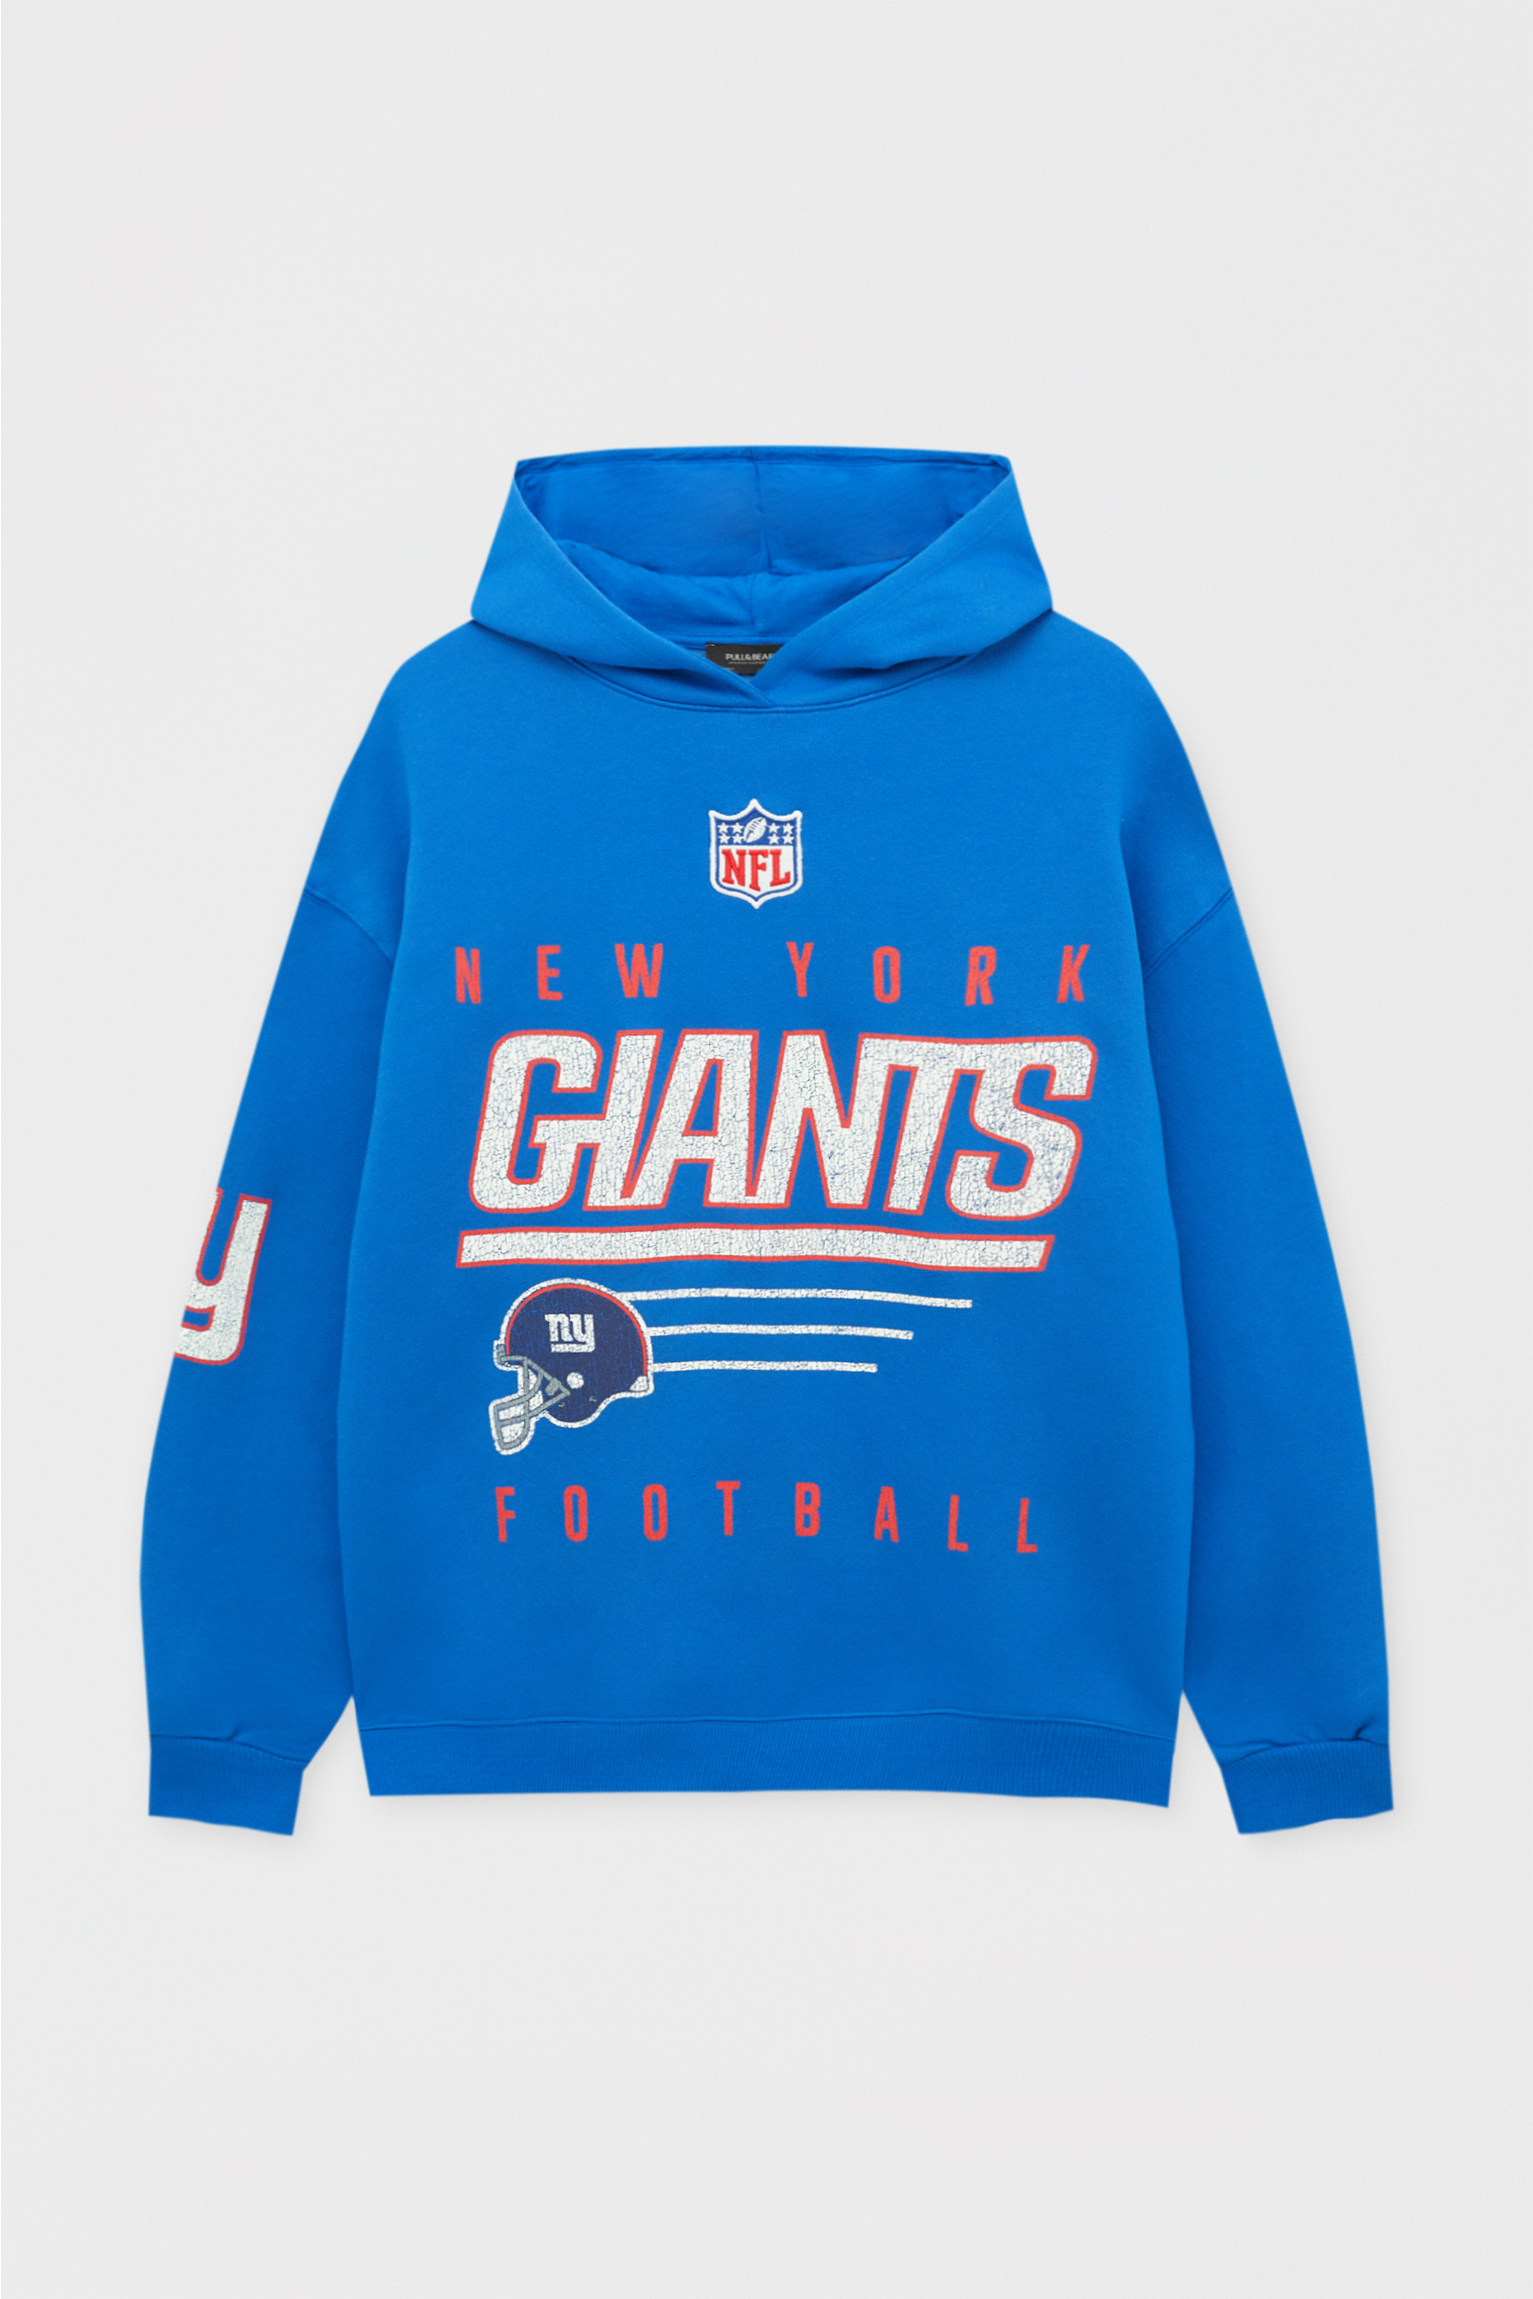 NFL New York Giants hoodie - pull\u0026bear